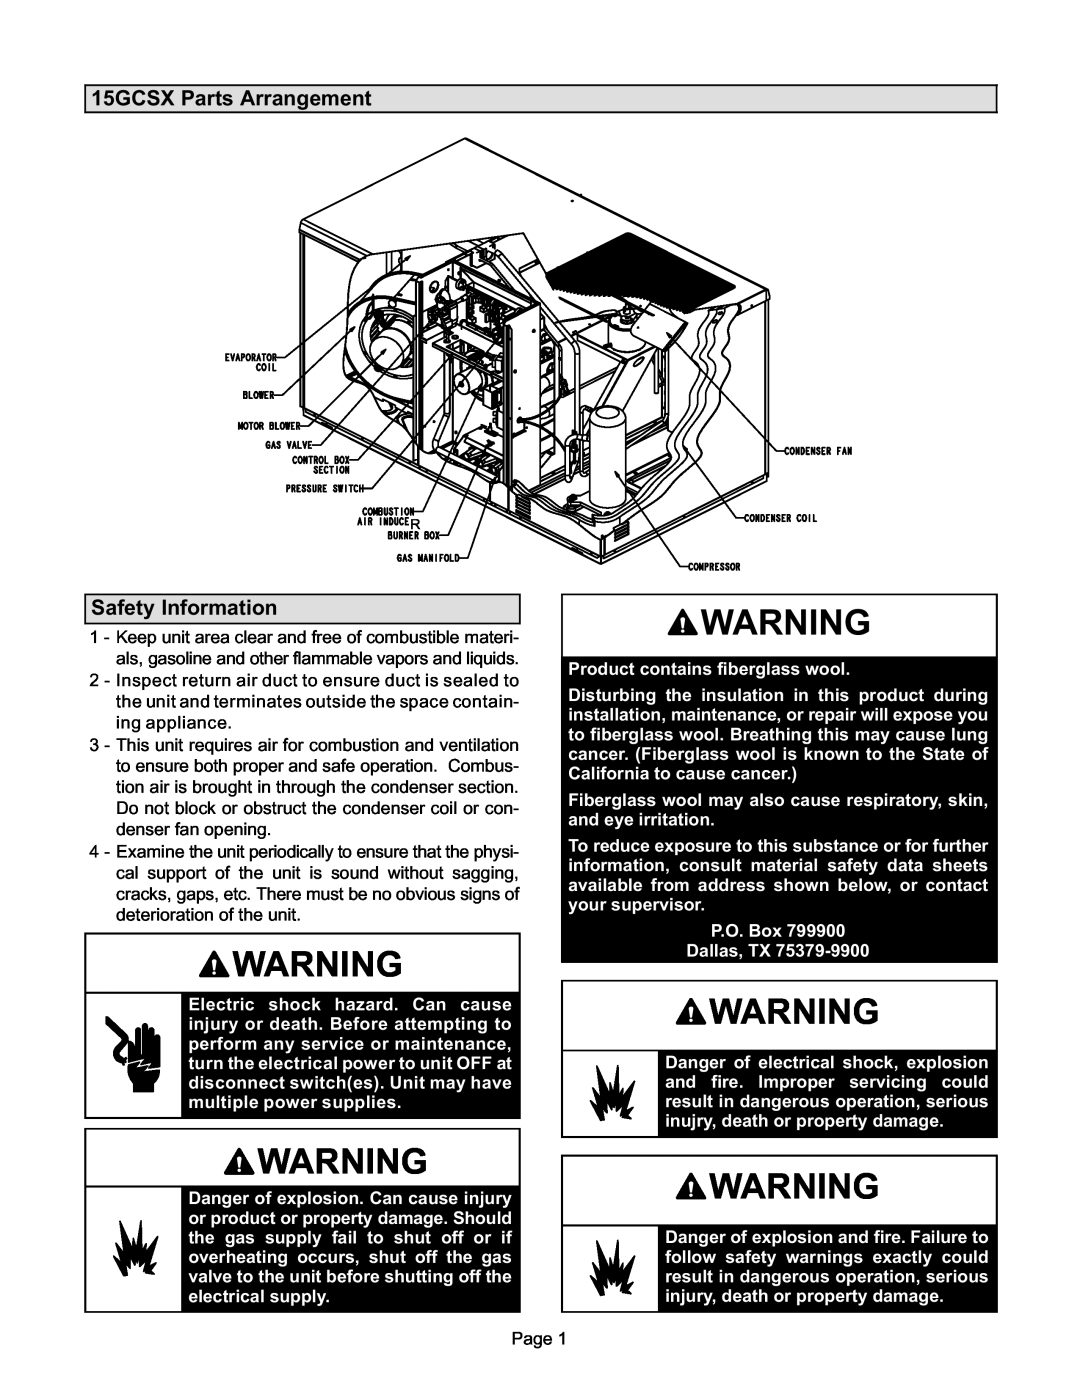 Lennox International Inc Lennox Unit manual 15GCSX Parts Arrangement, Safety Information 